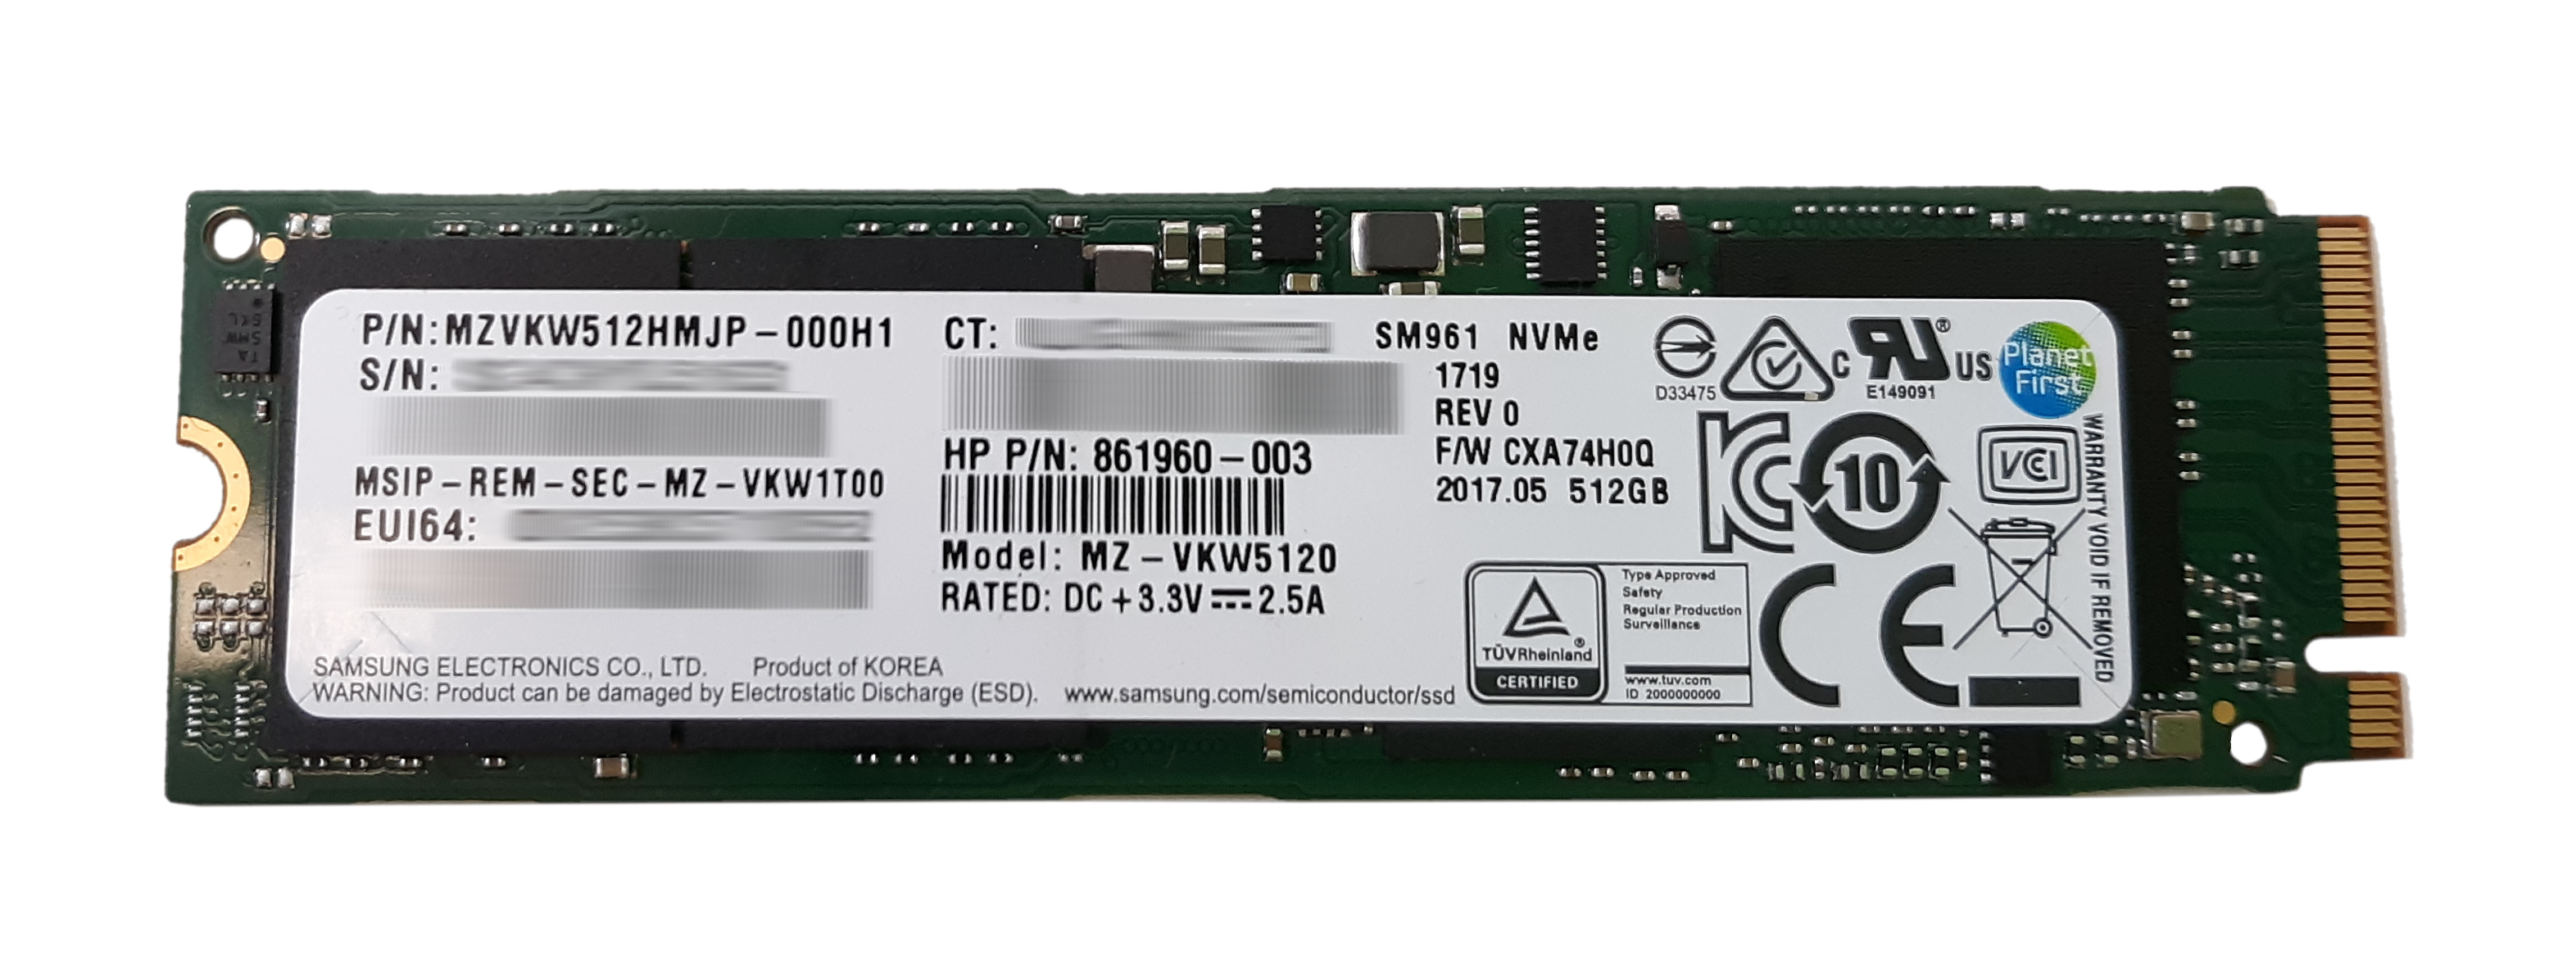 HP Samsung 512GB SSD MZ-VKW5120 SM961 M.2 PCI-E x4 MZVKW512HMJP-000H1 861960-003